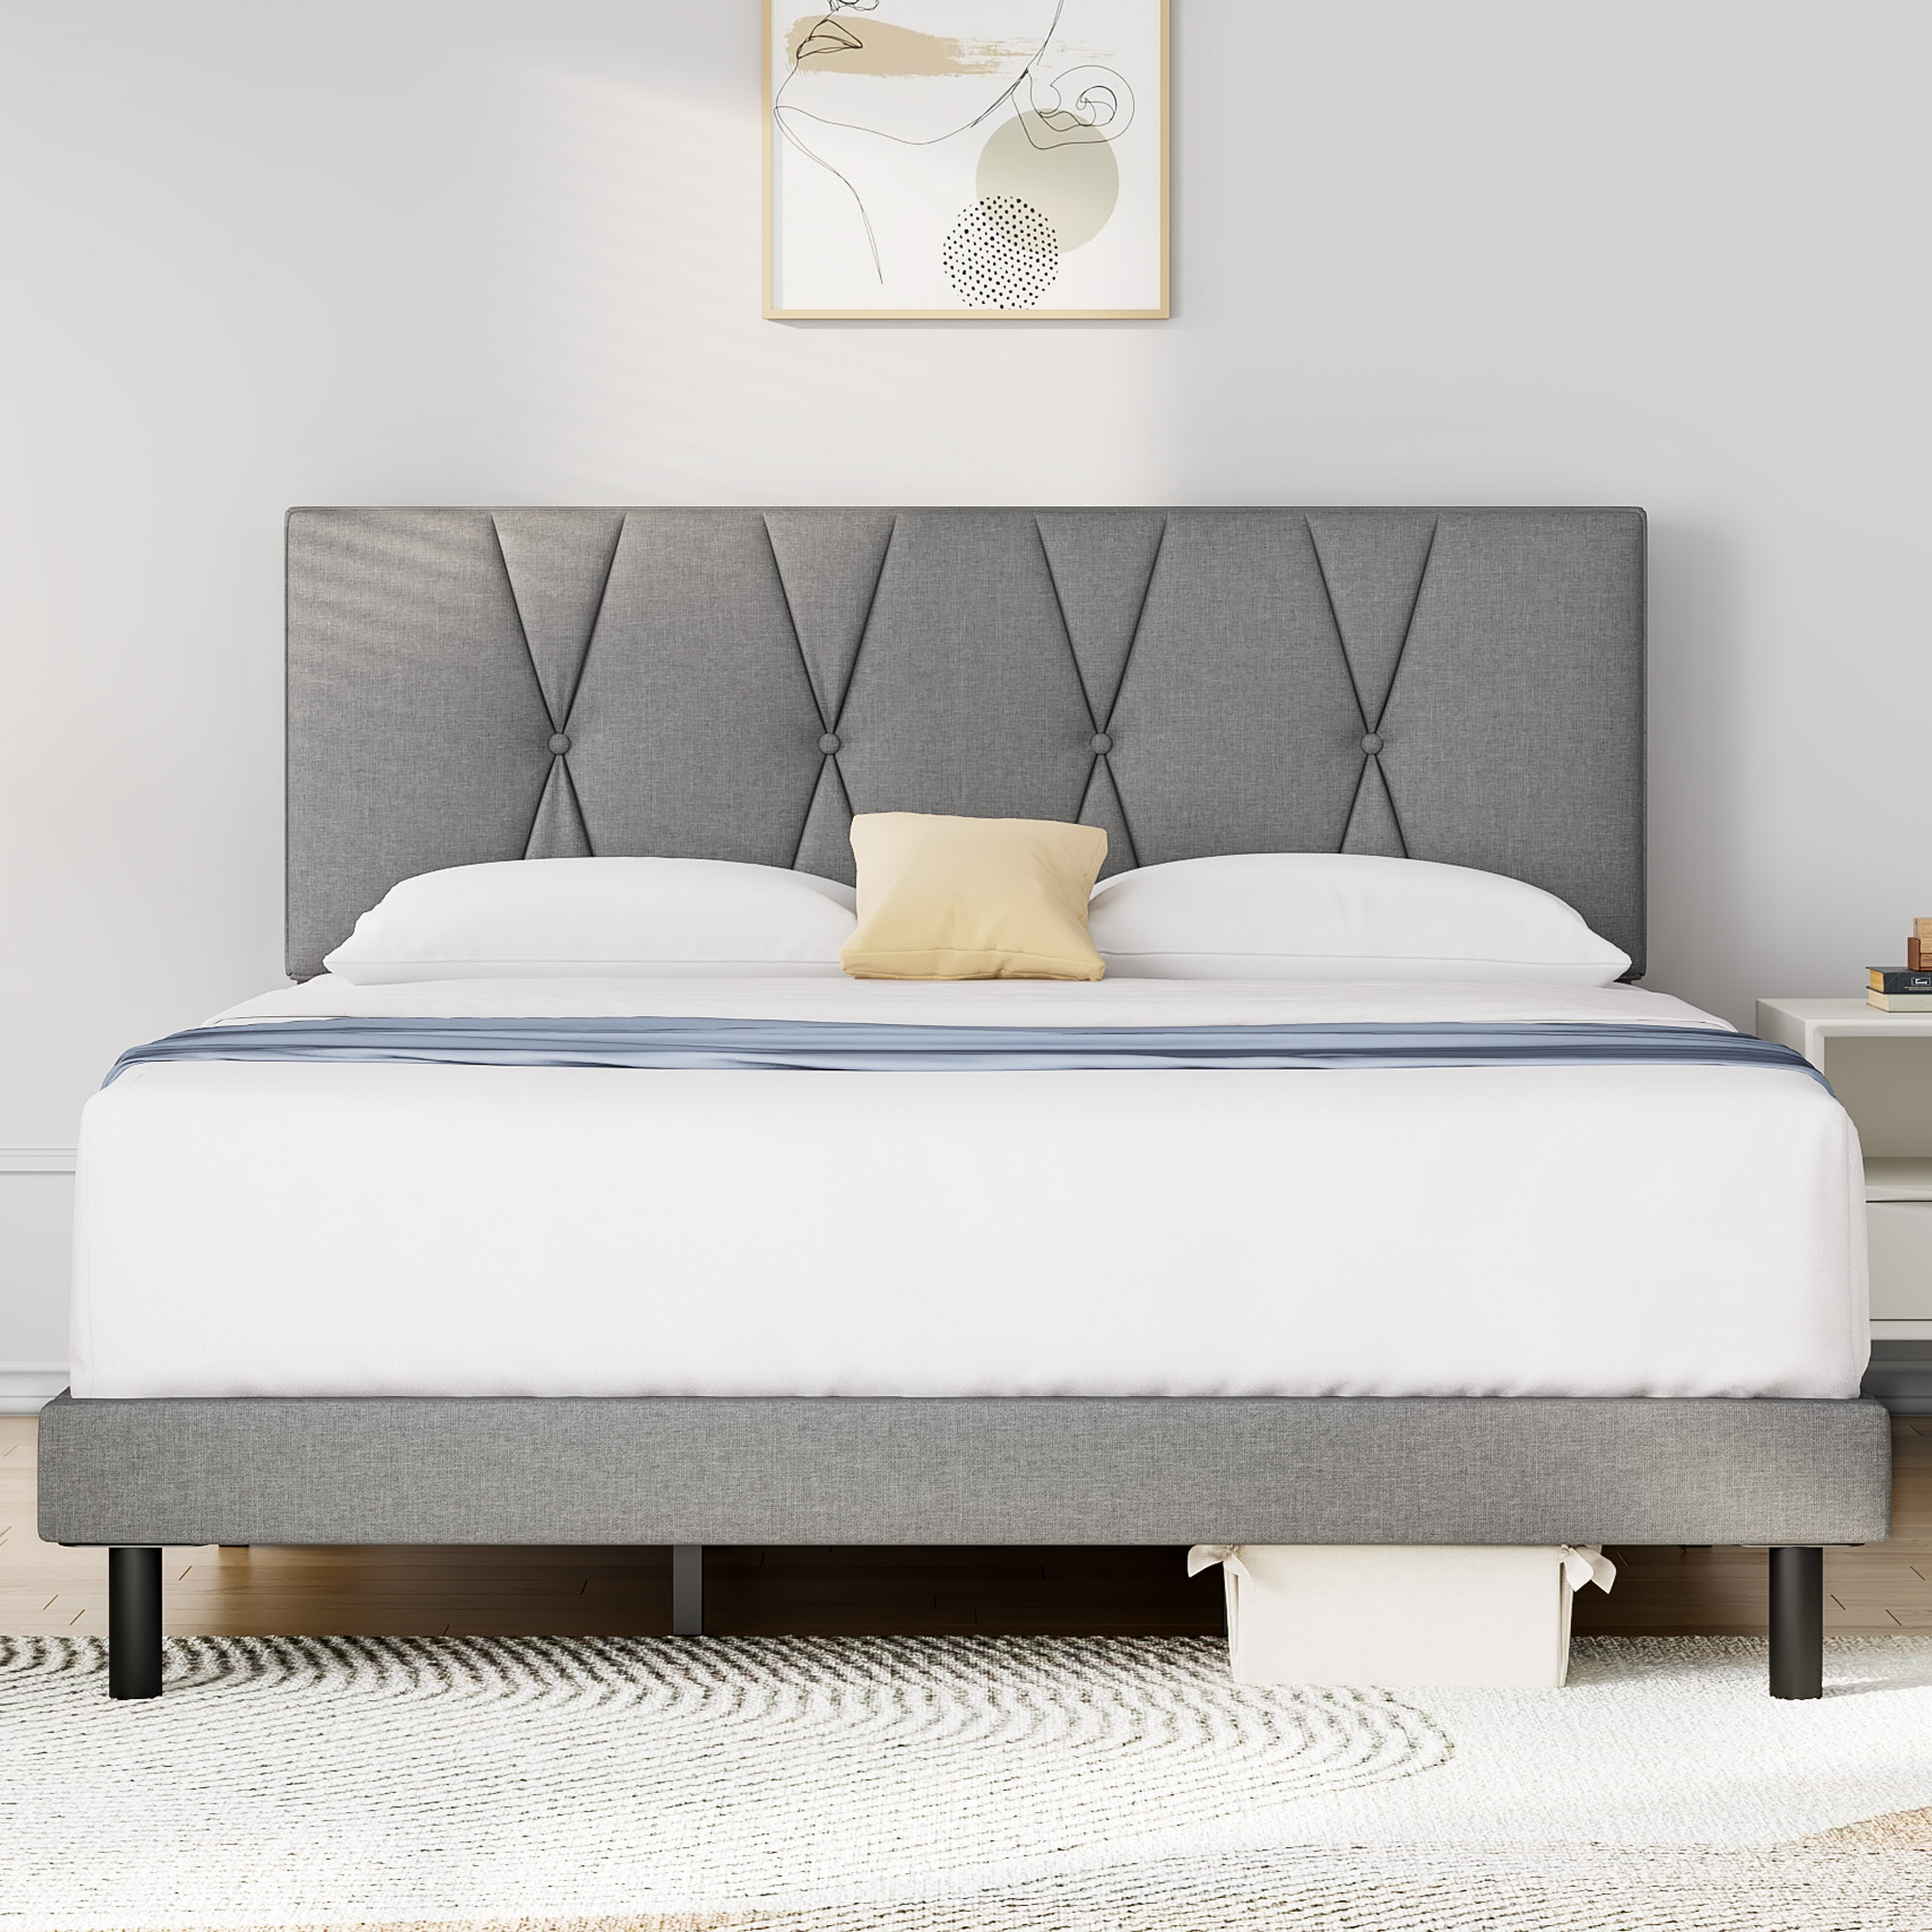 King Bed Frame, HAIIDE King Size Platform Bed With Fabric Upholstered Headboard,Light Grey - image 1 of 7